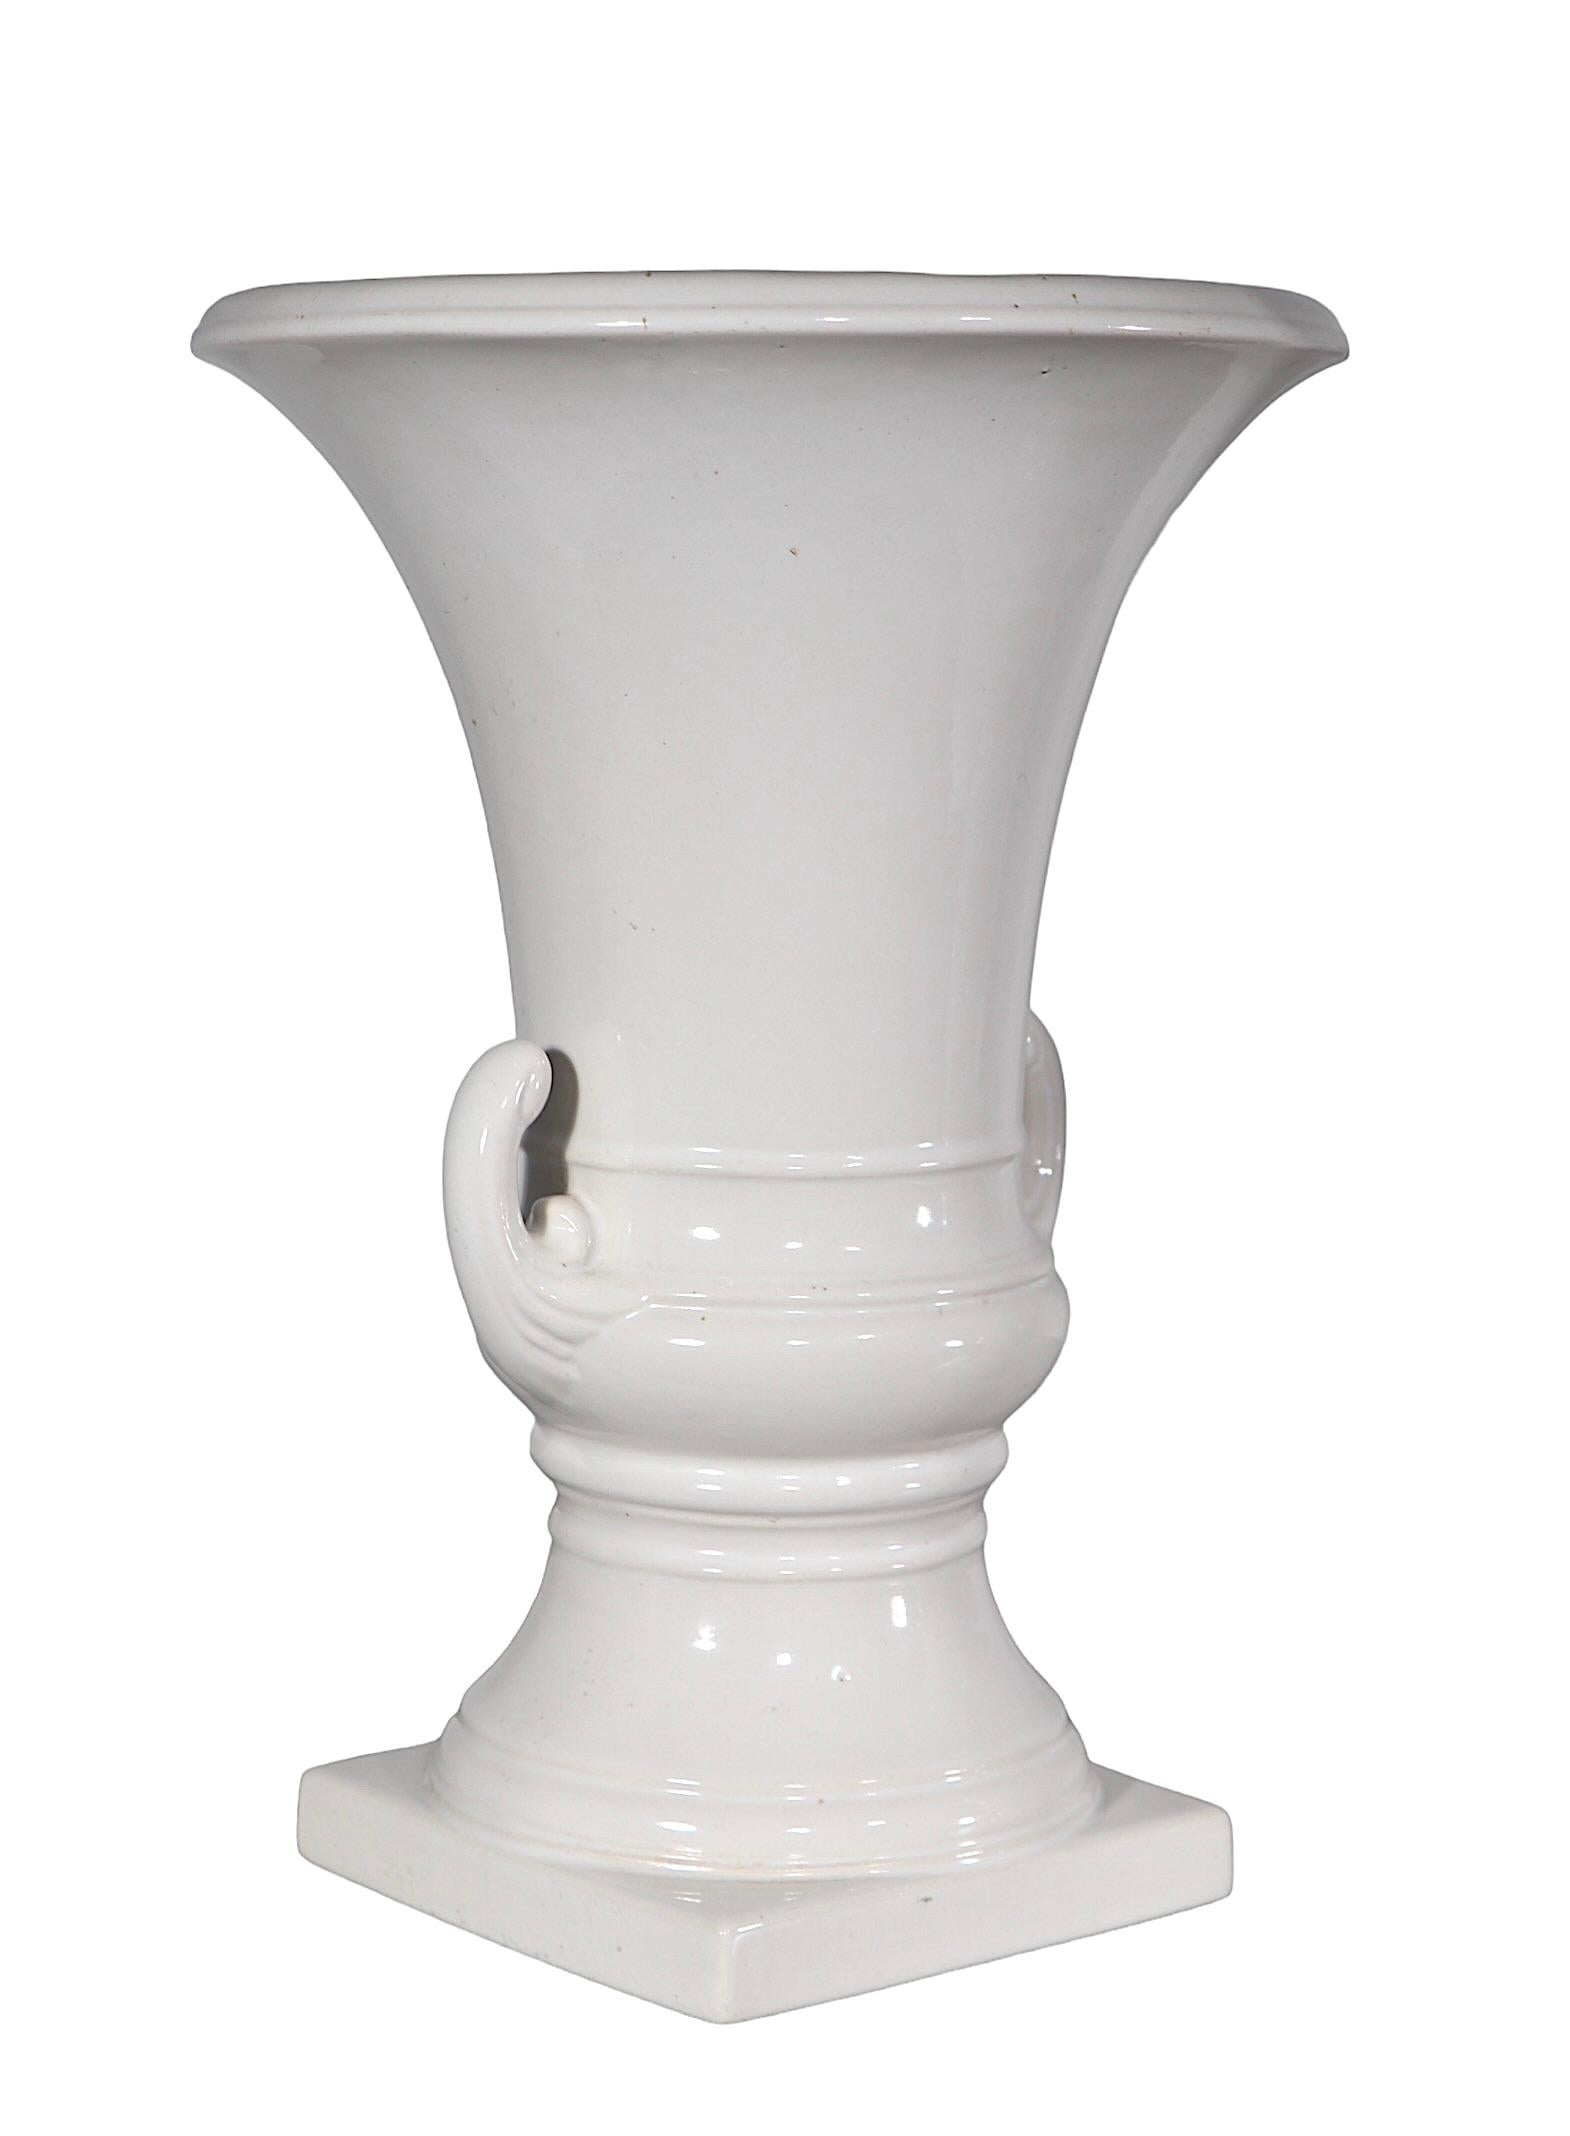 Pr. White on White Ceramic Urn Campagna  Form Vases   For Sale 2